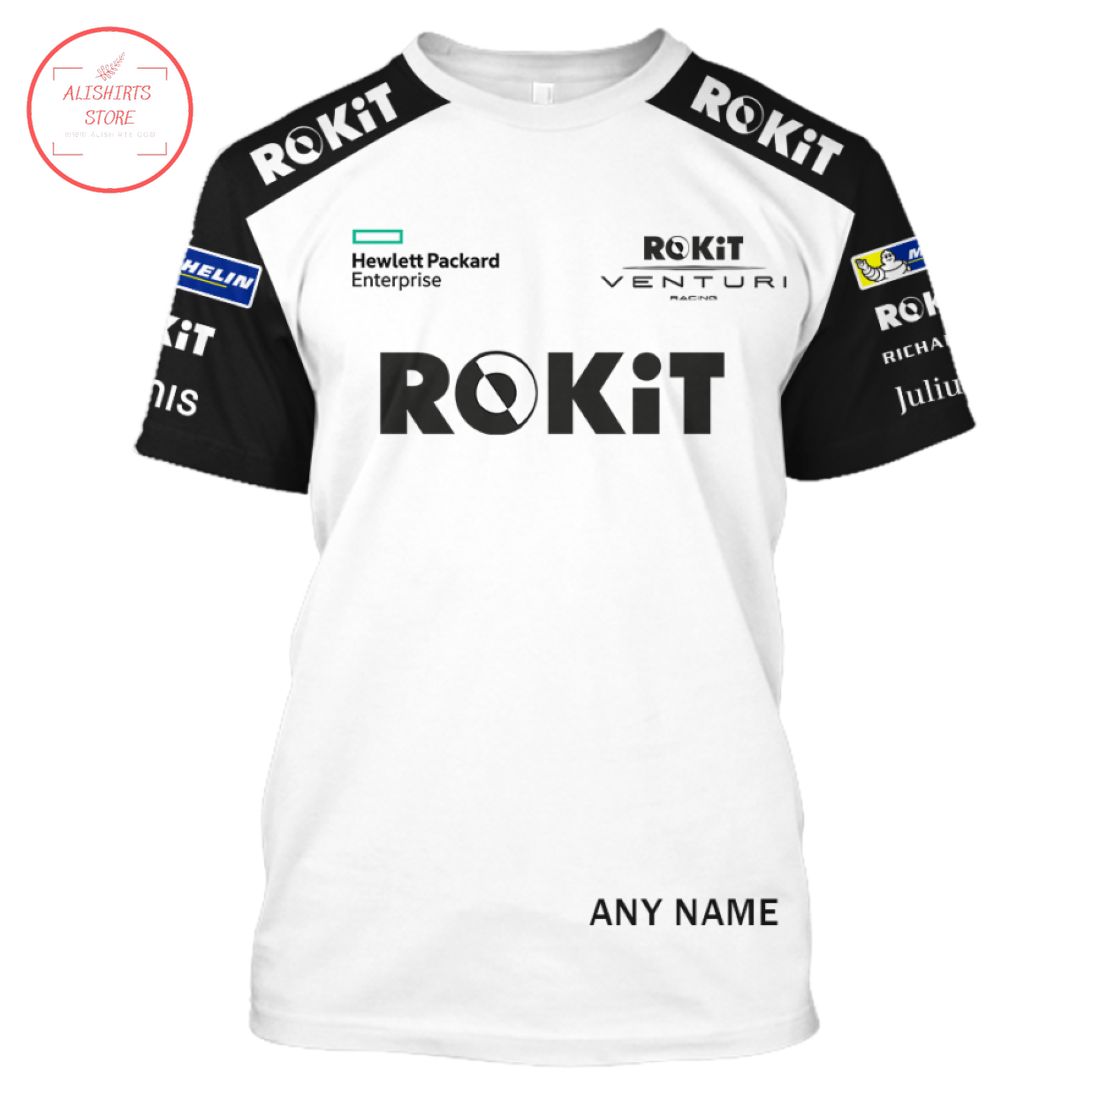 Rokit Venturi Racing Team Personalized 3d Shirts